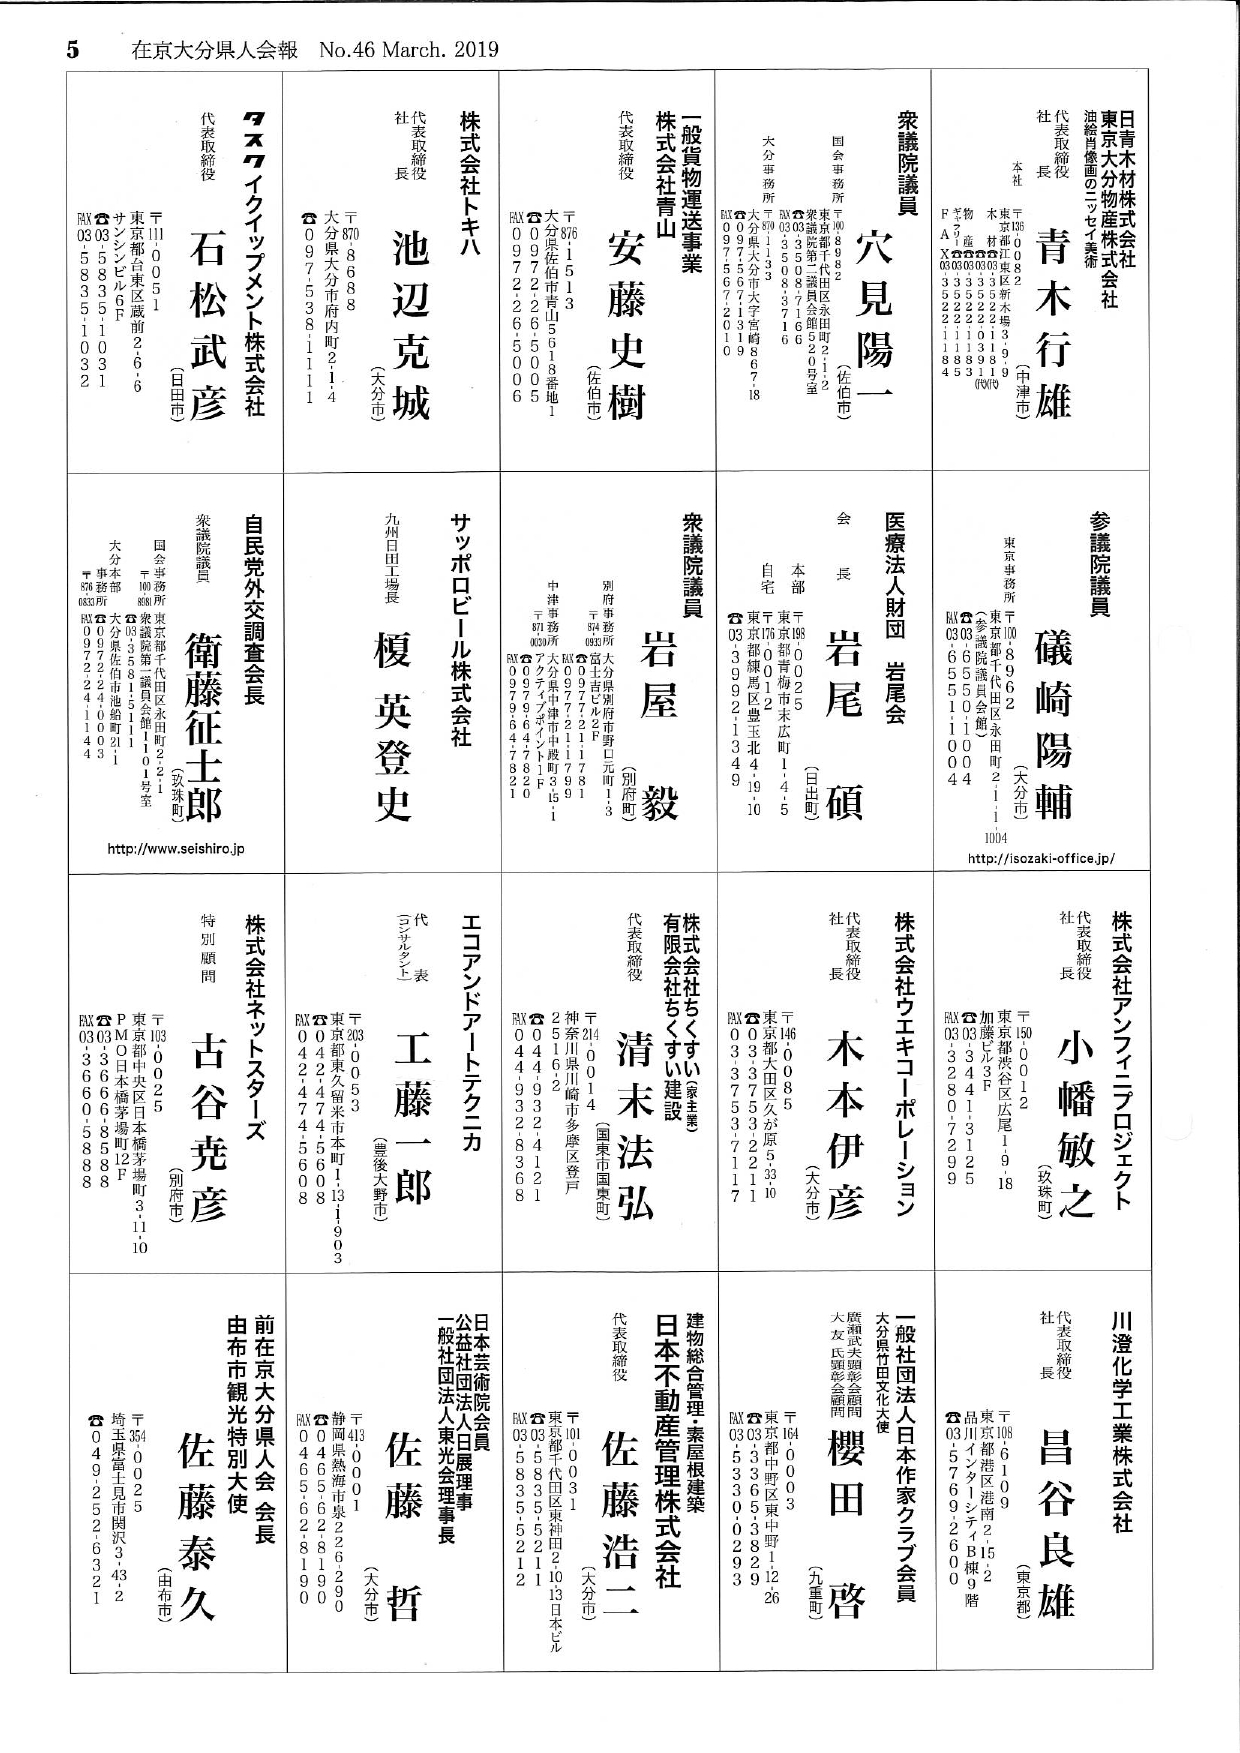 会報 No.46 p5